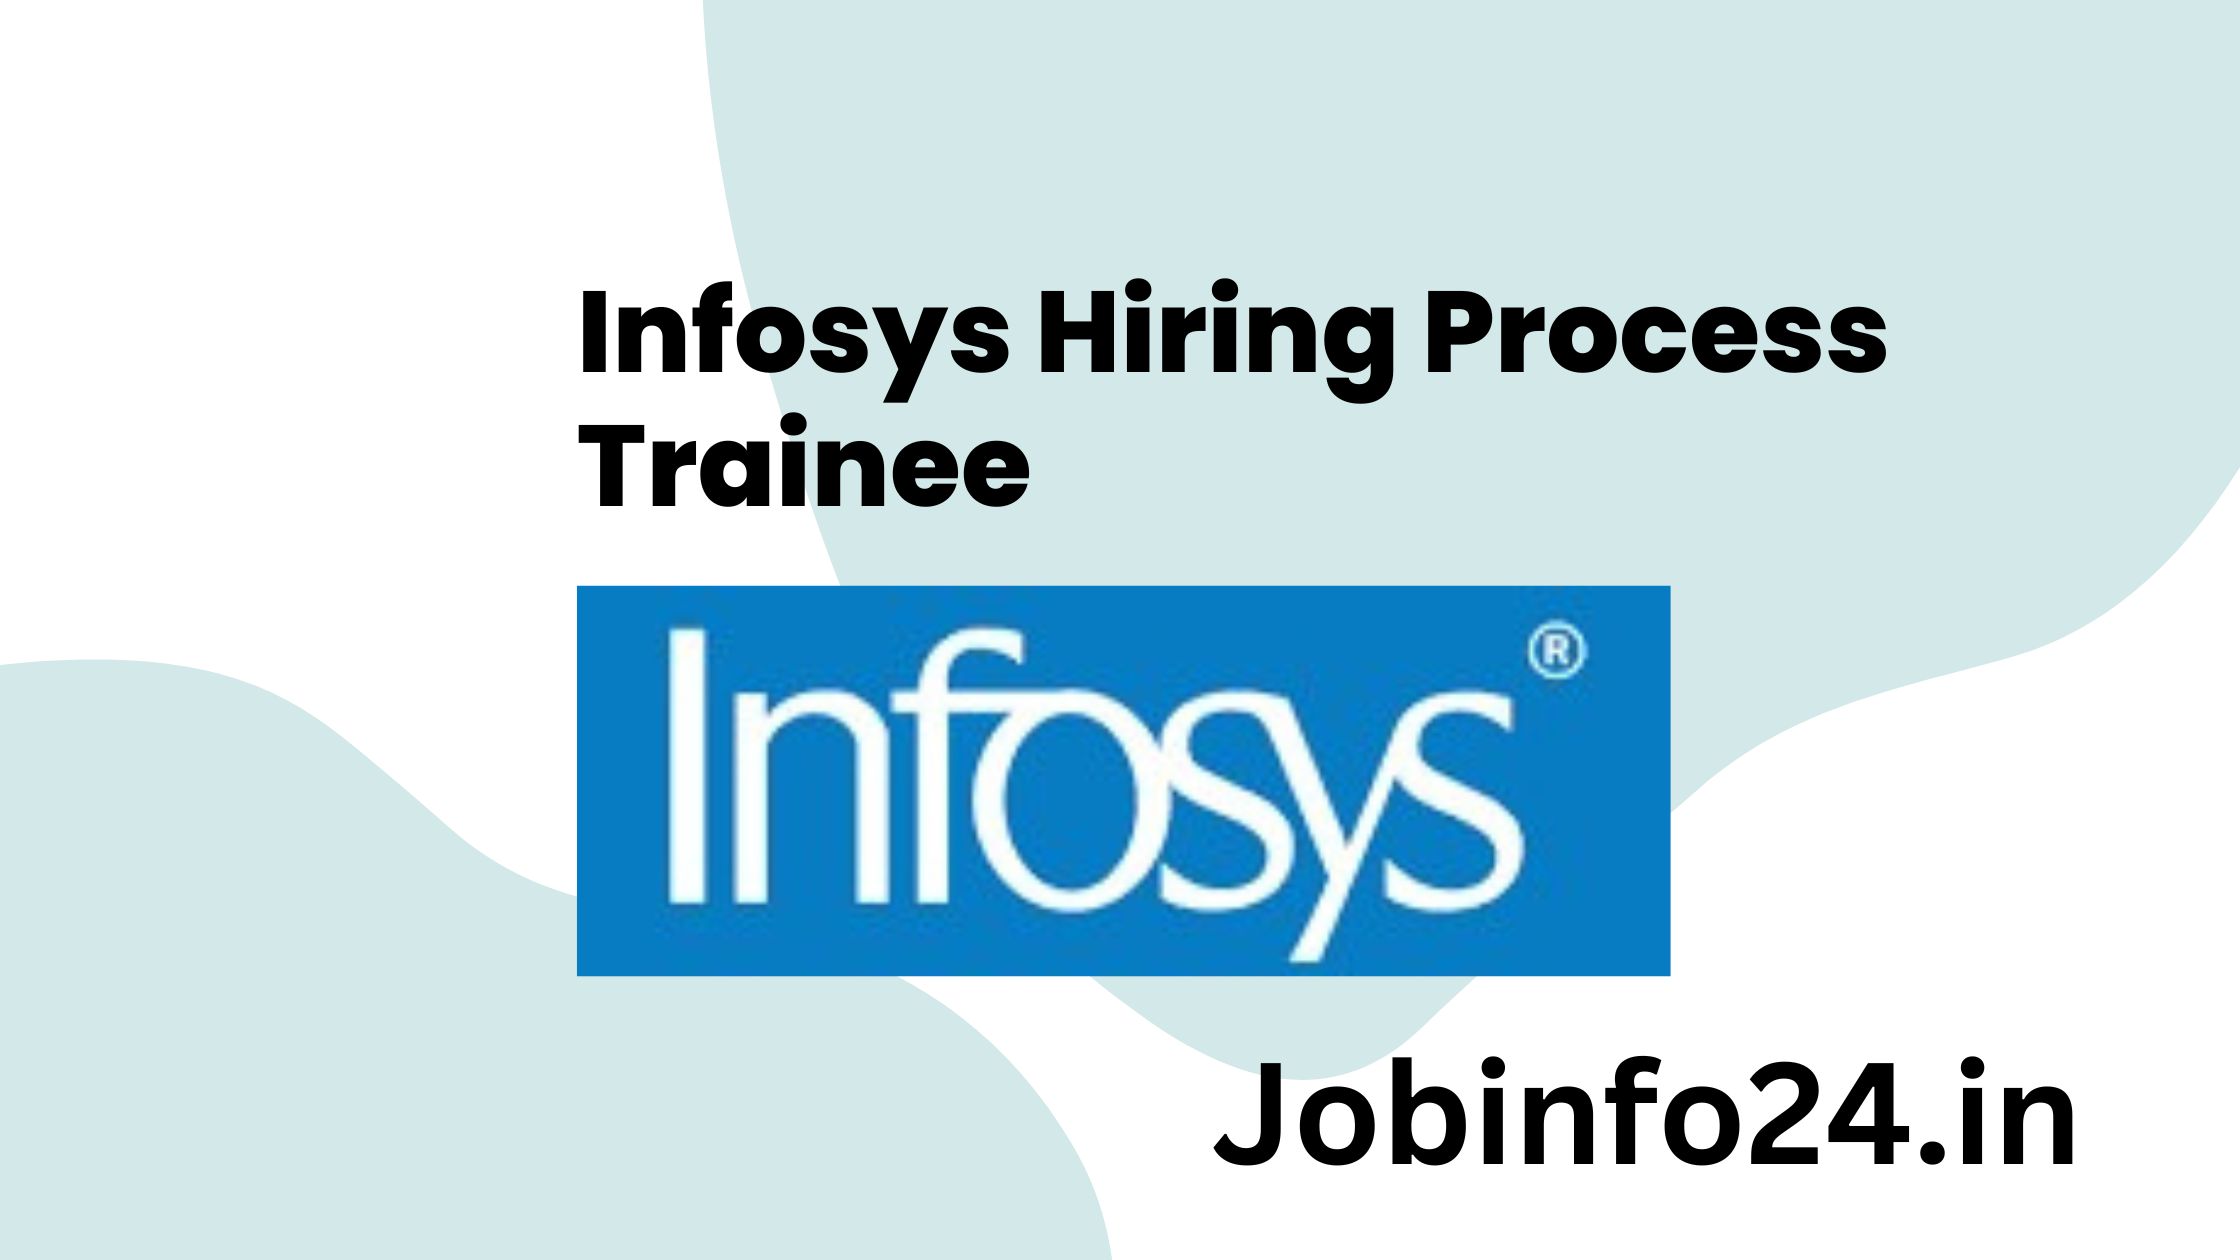 Infosys Hiring Process Trainee